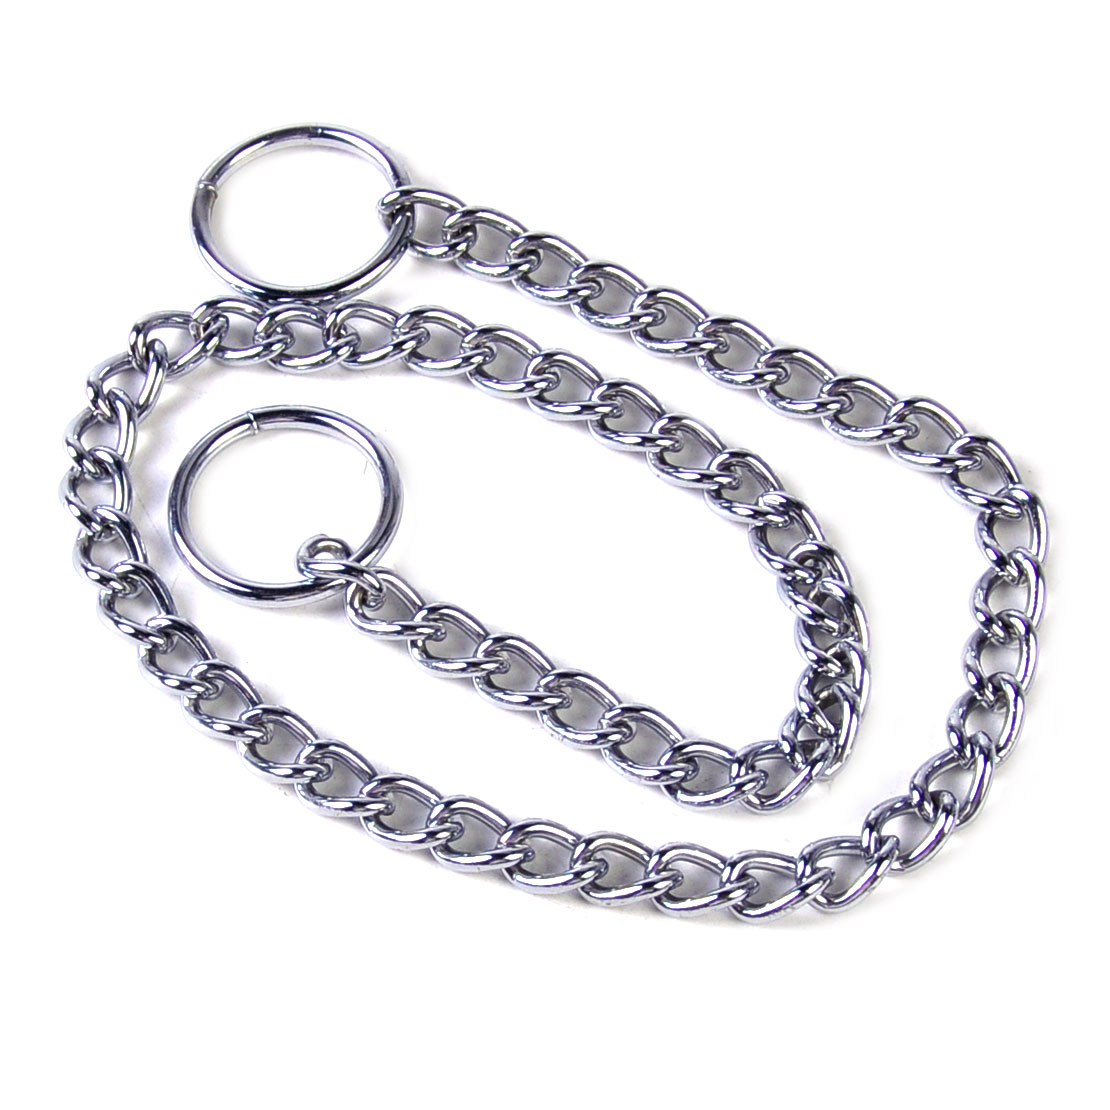 Hund Metall Halskette Kettenhalsband Hundehalsband Halsband Haustier